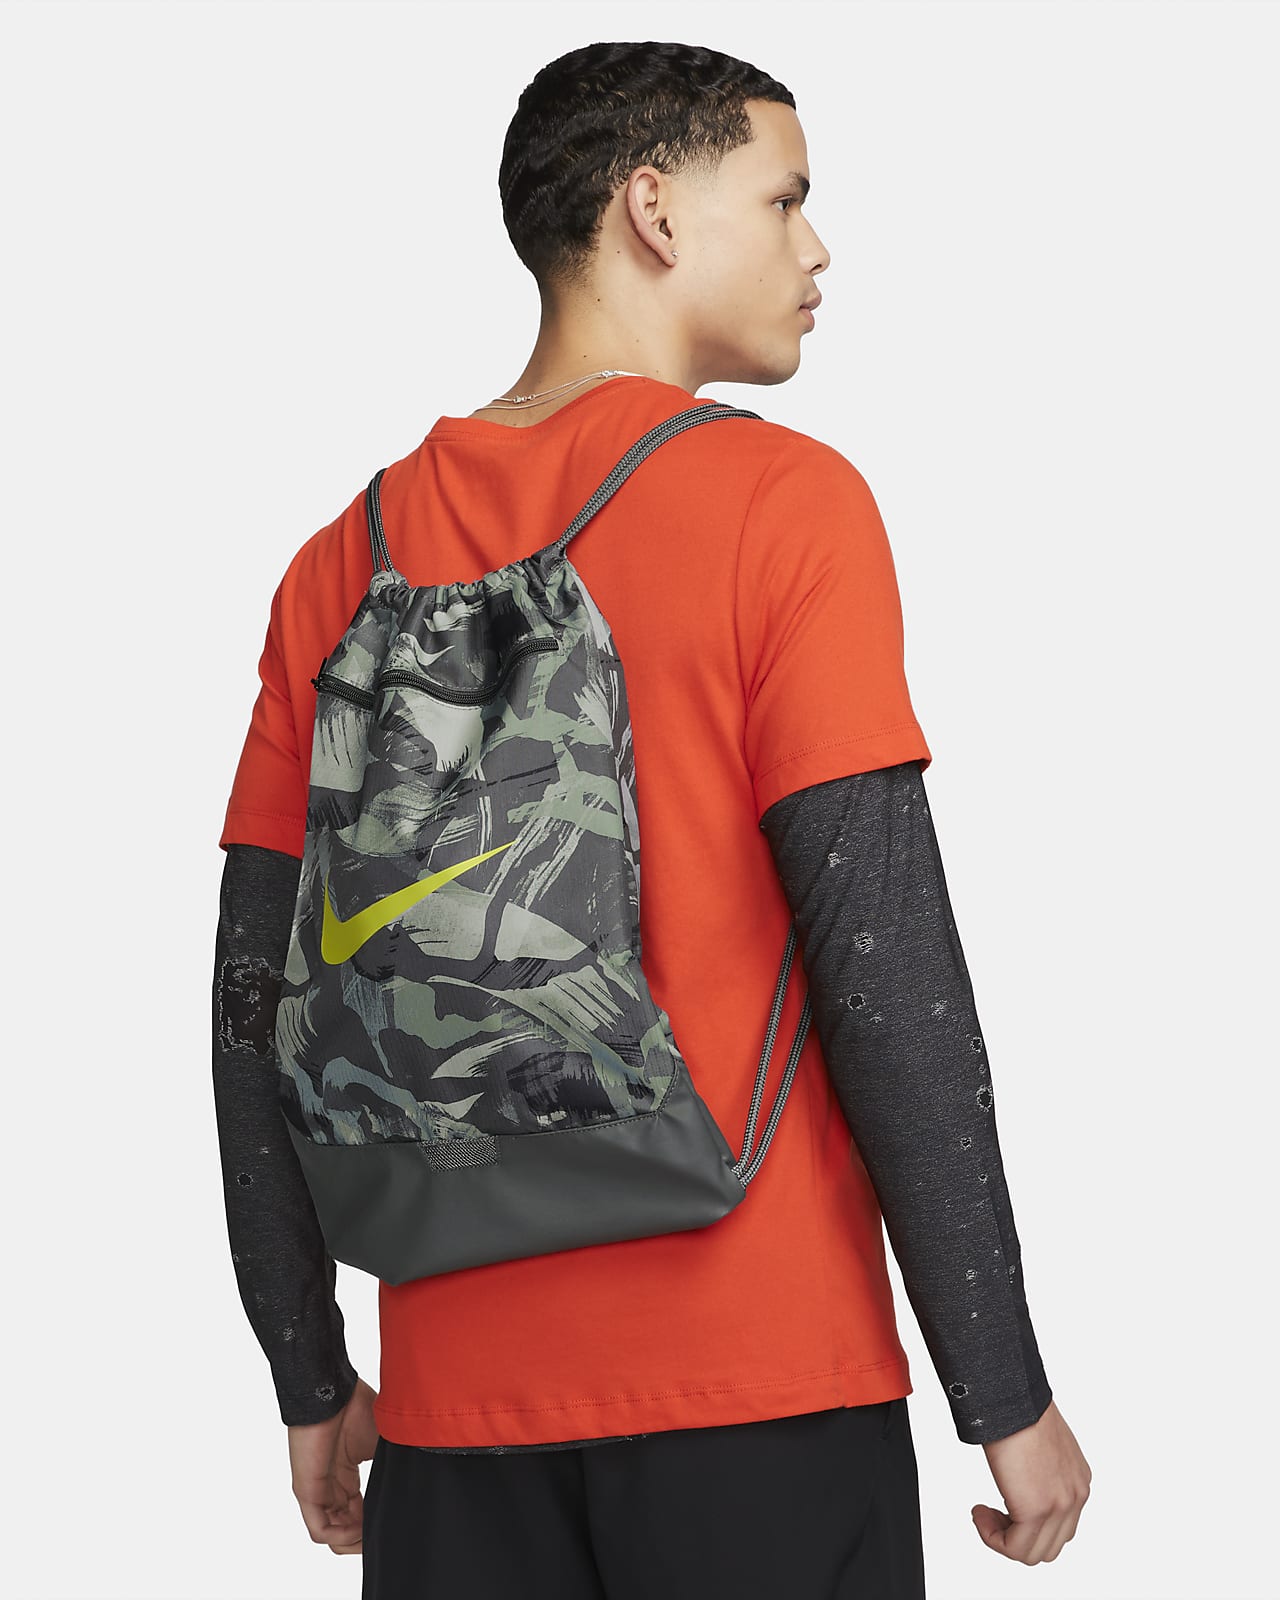 Nike Brasilia Printed Drawstring Bag (18L)